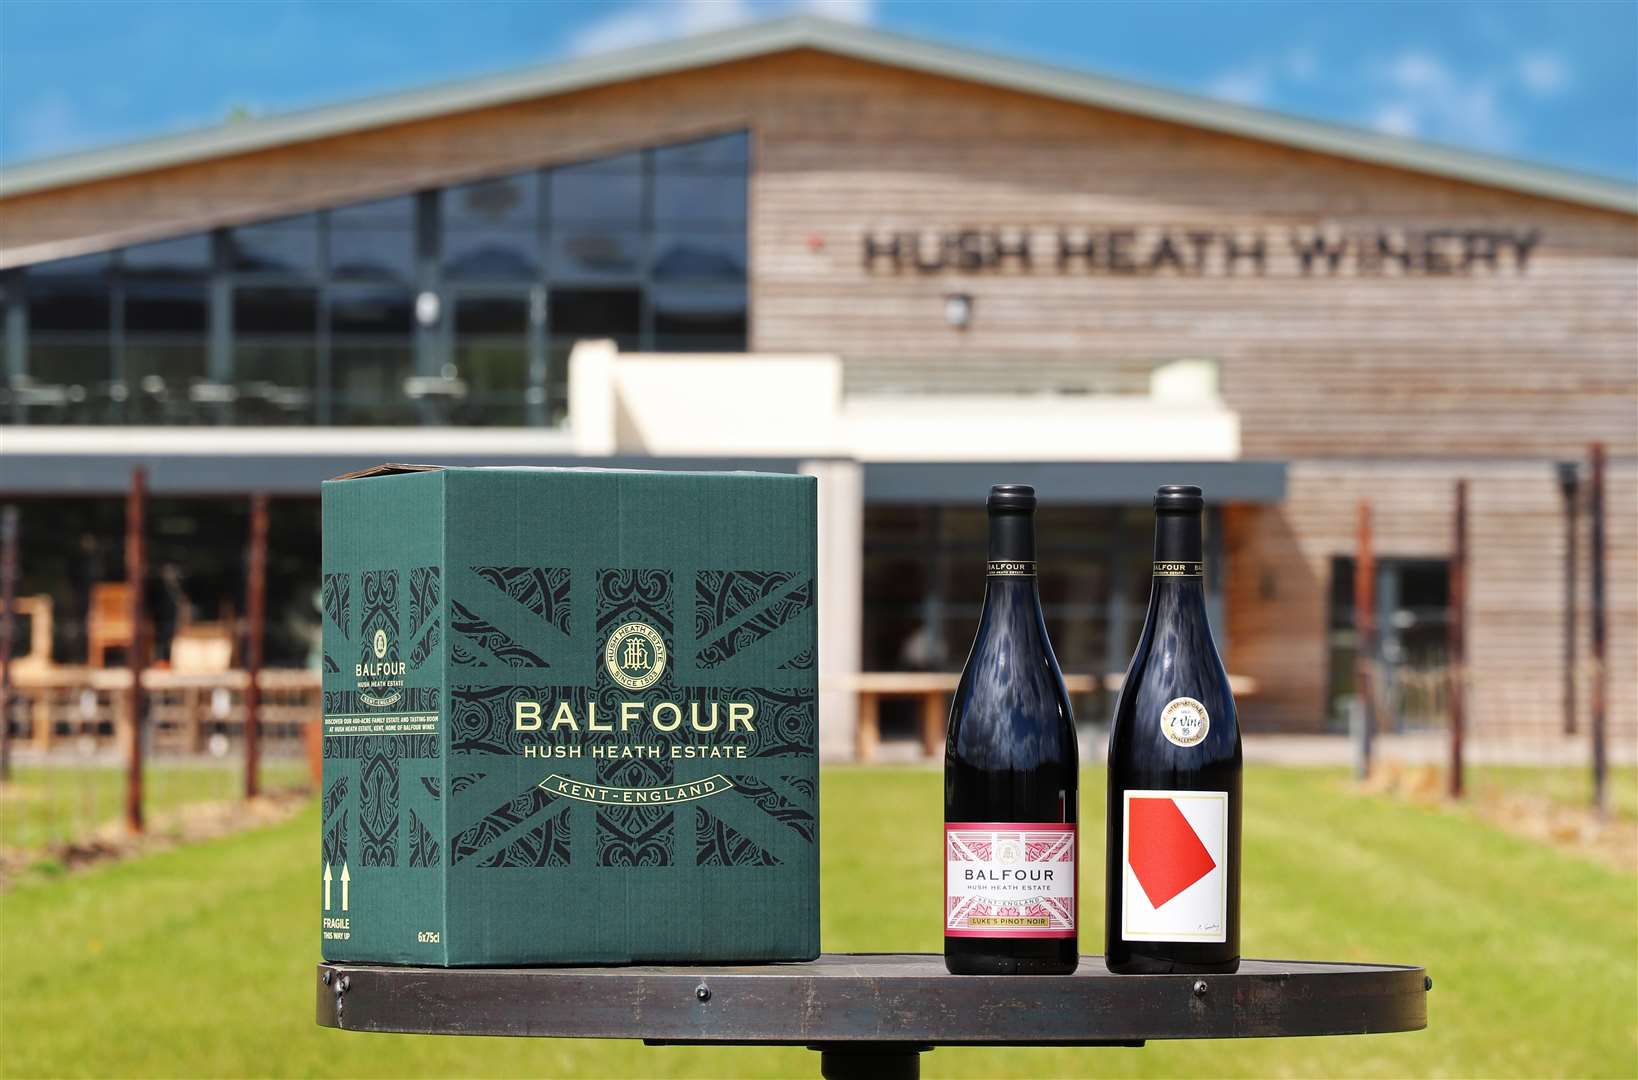 Award-winning red wines are now being made by Hush Heath Estate near Staplehurst